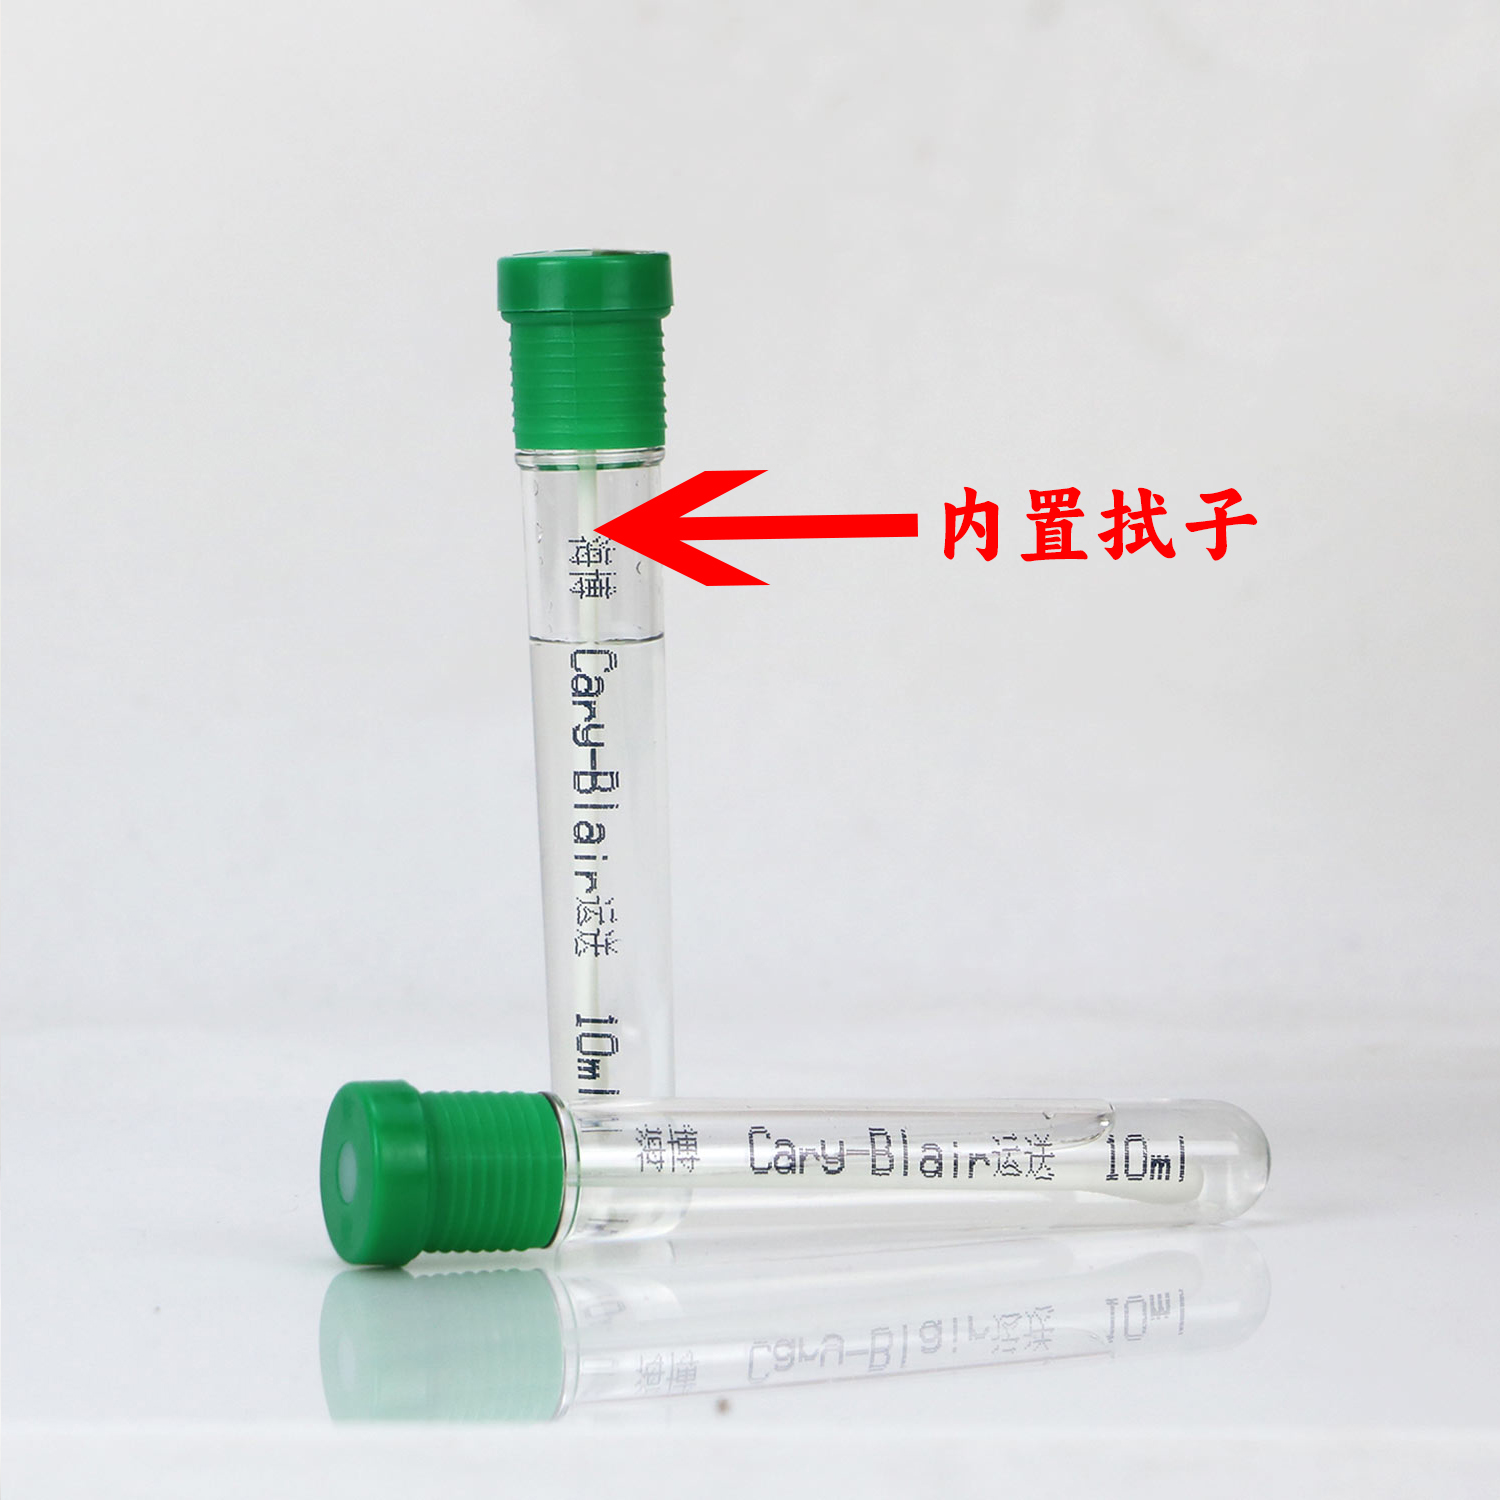 Cary-Blair运送培养基管（液体）含拭子用法